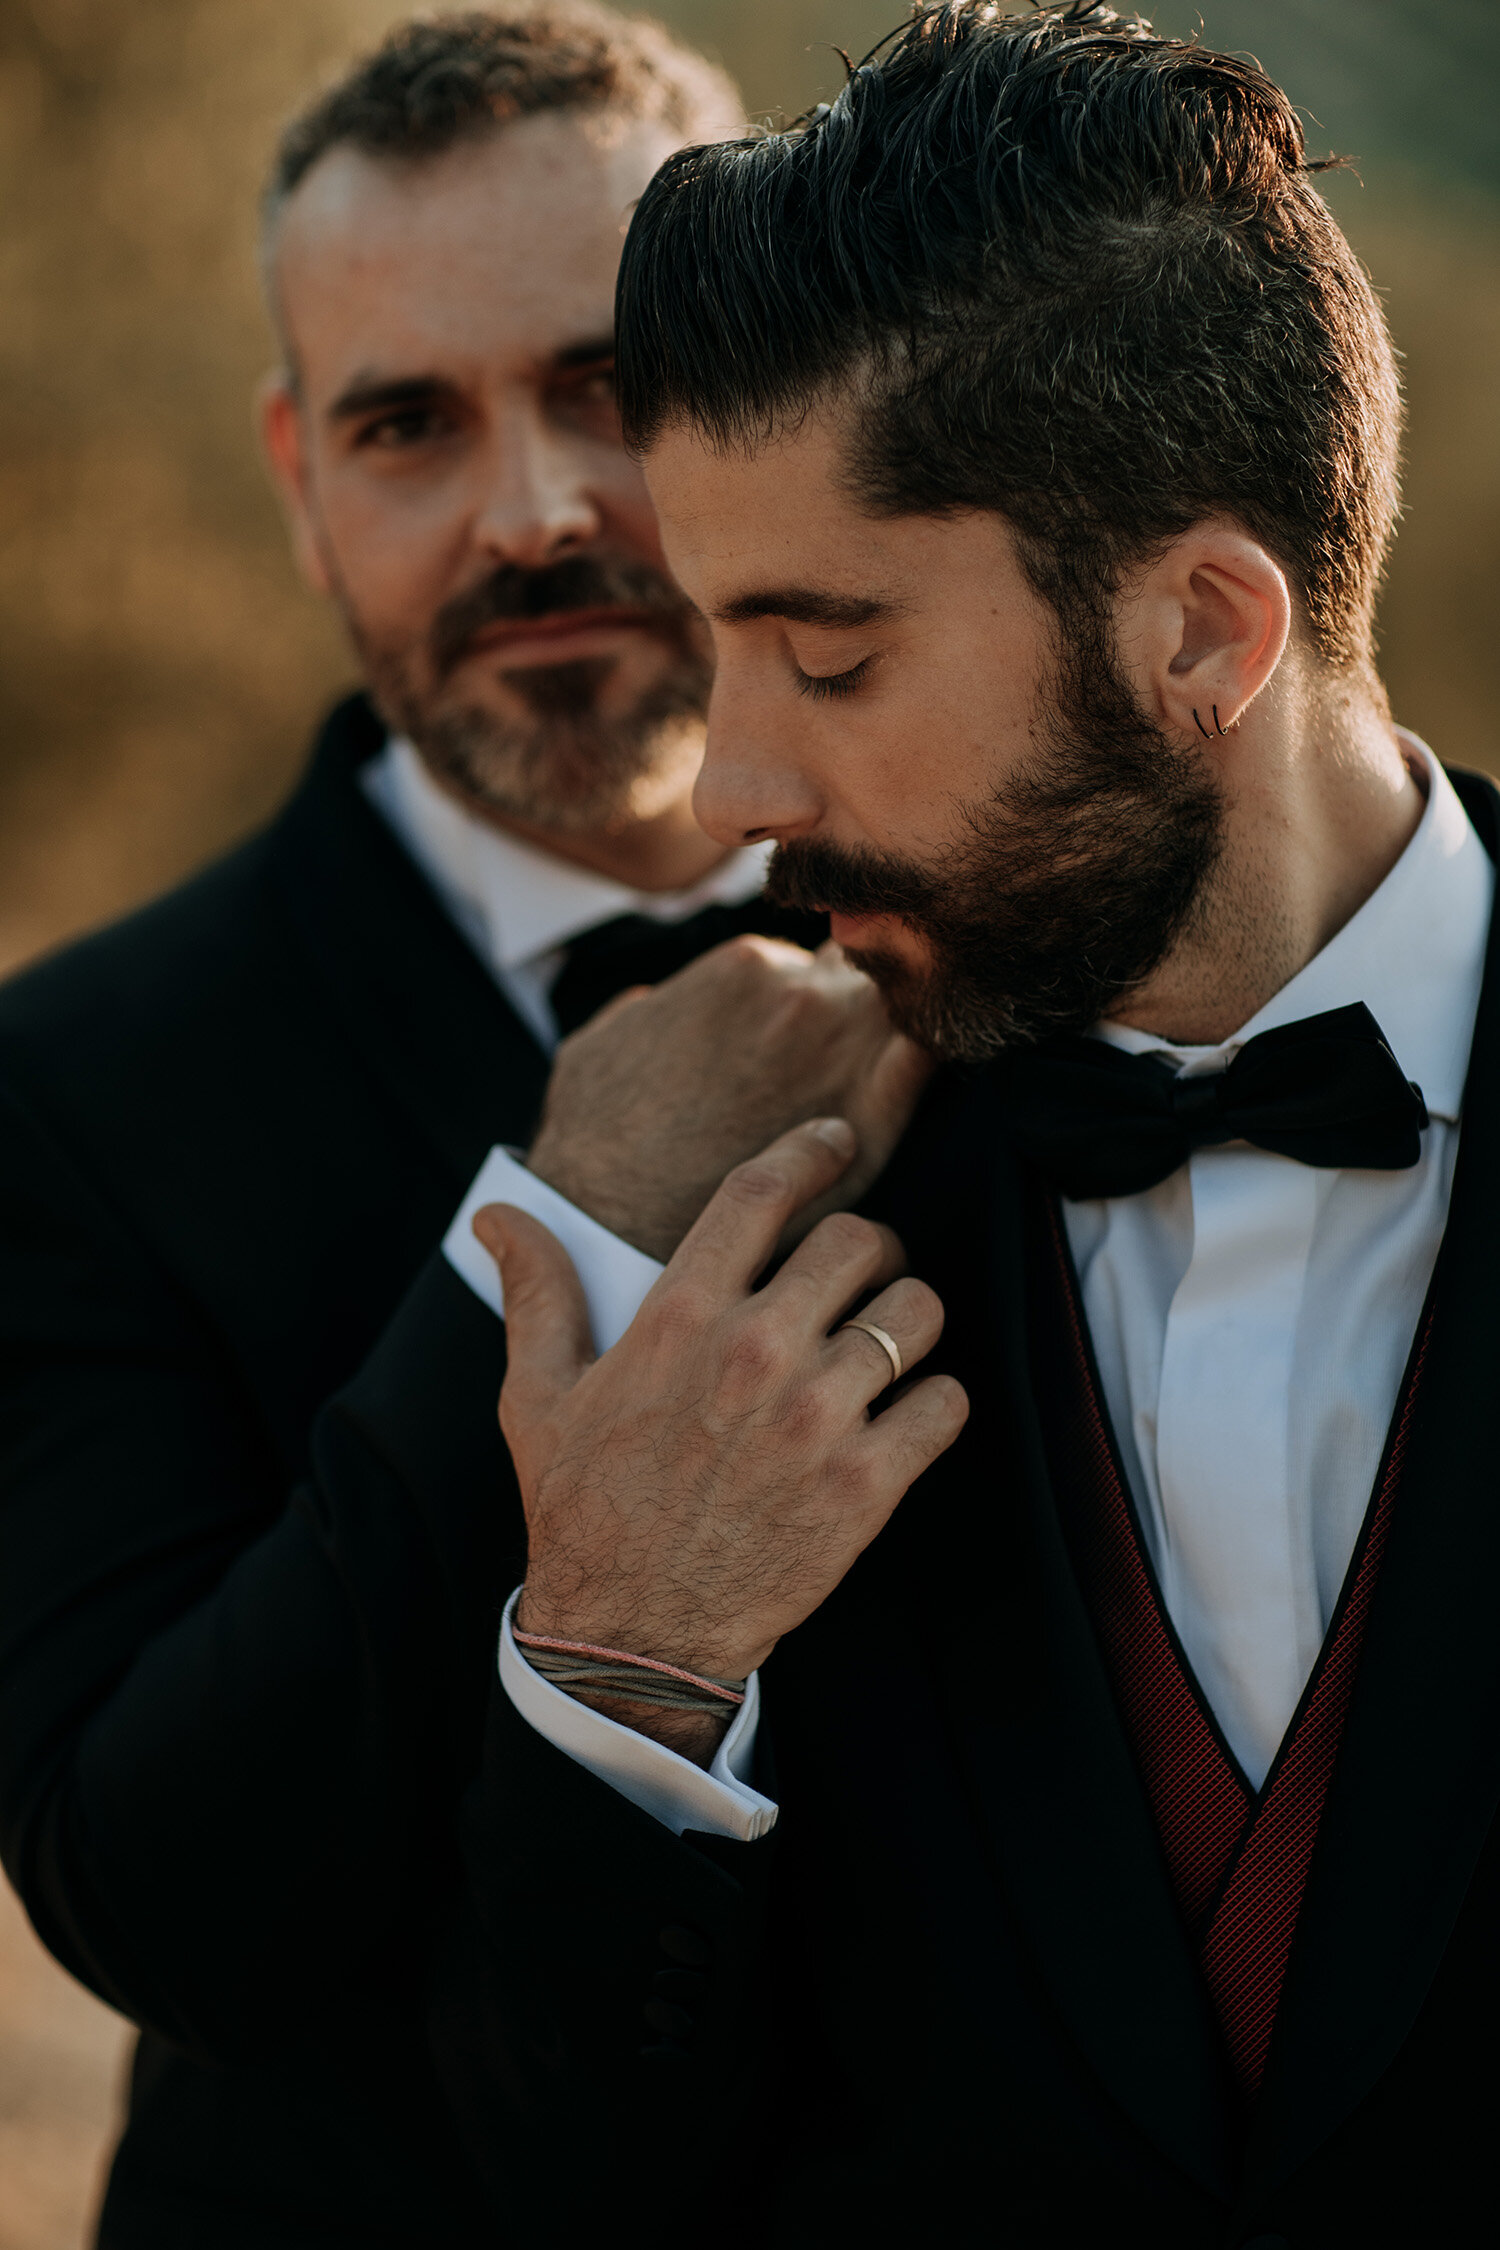 067_Jose_Reyes_boda_pareja_gay_lgtb_wedding_chicos_Zaragoza_Granada_love_forografo_bodas.jpg